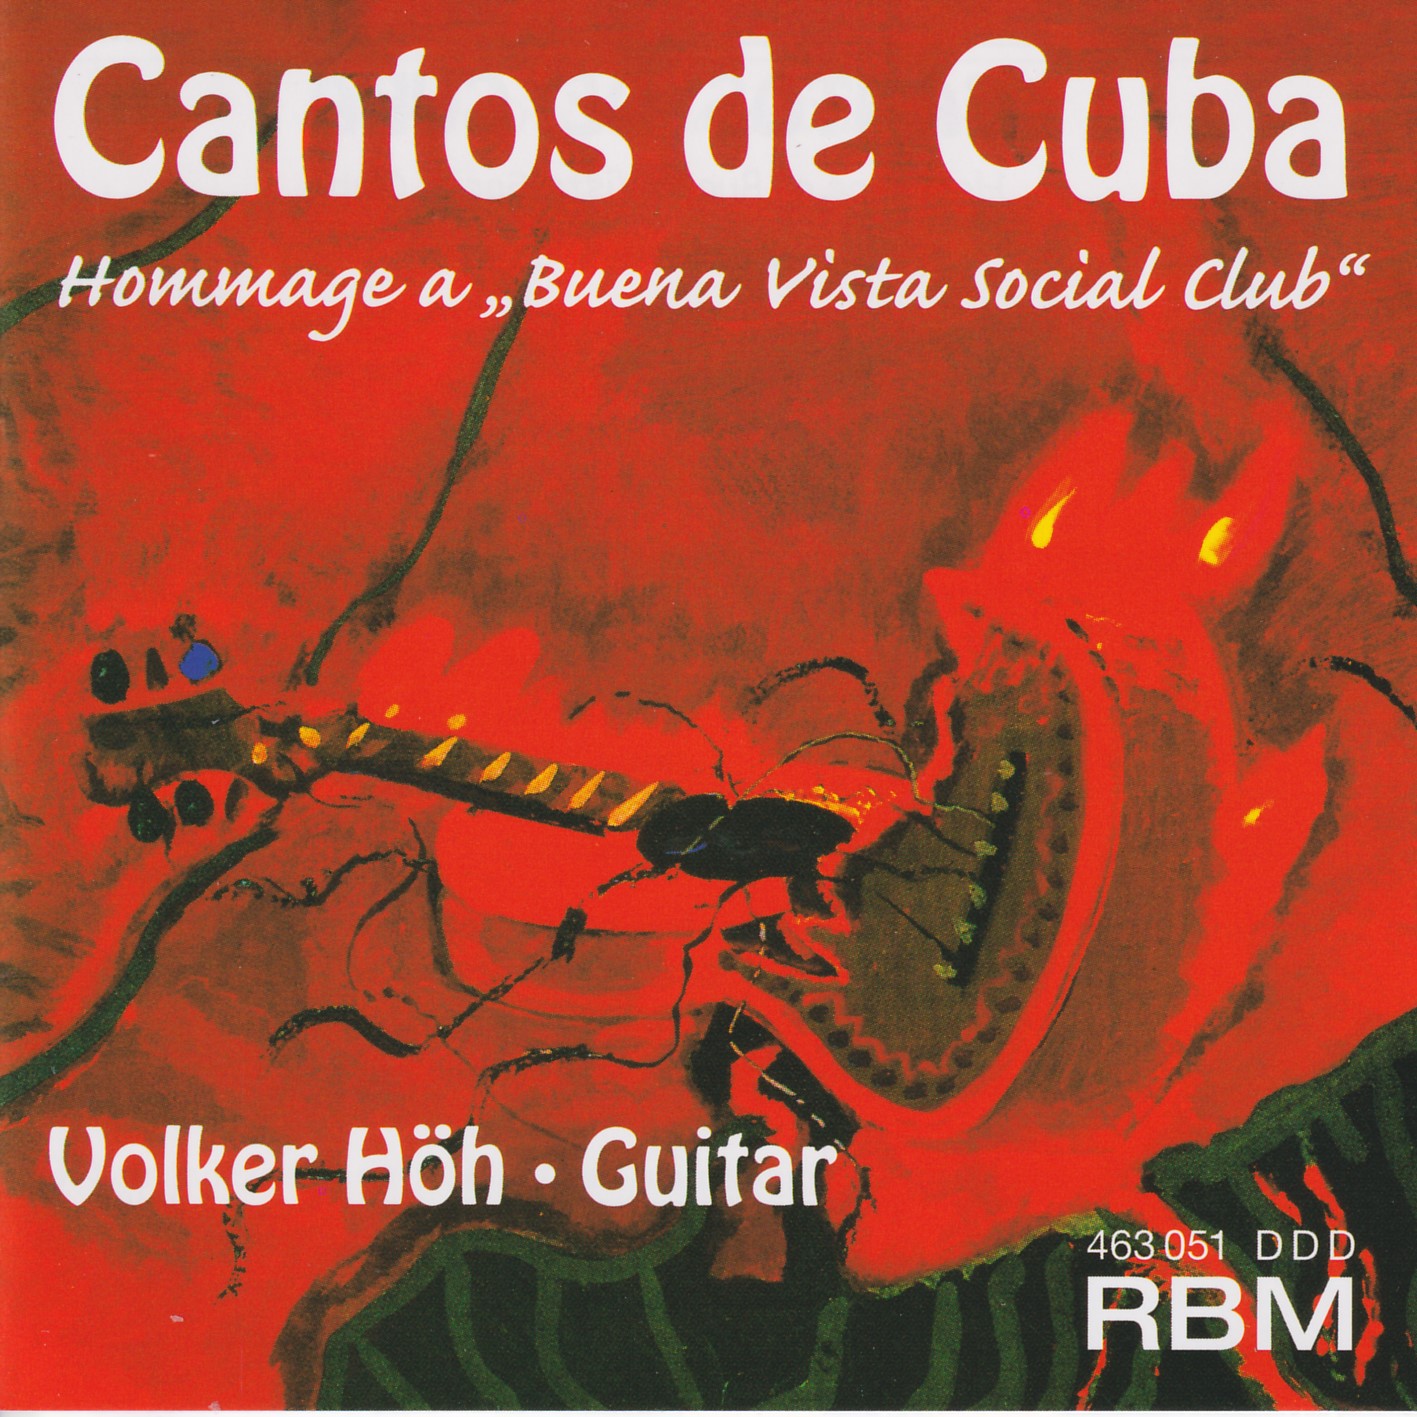 Cantos de Cuba - Hommage a "Buena Vista Social Club"